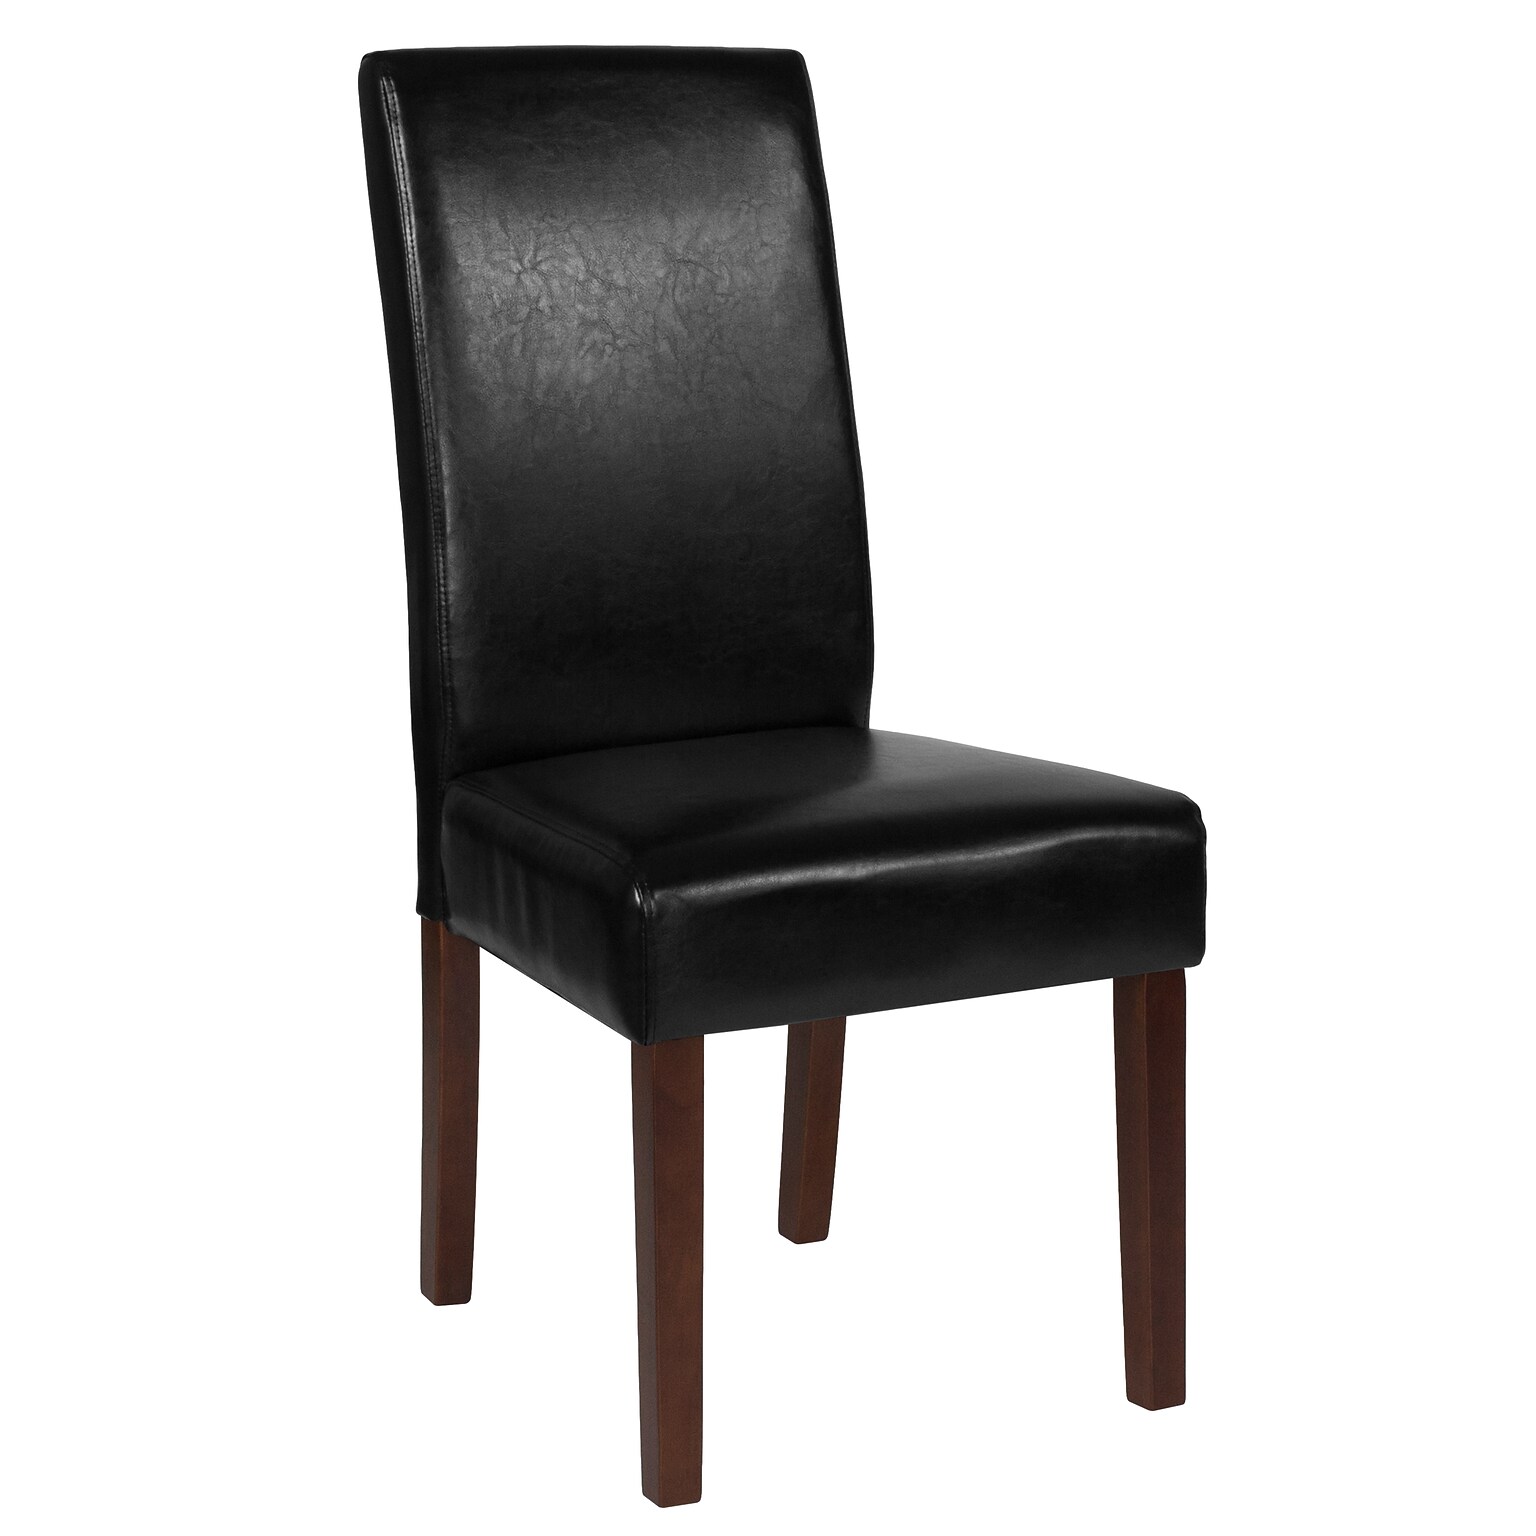 Flash Furniture Greenwich Series Mid-Century Modern LeatherSoft Parsons Dining Chair, Black (QYA379061BKL)